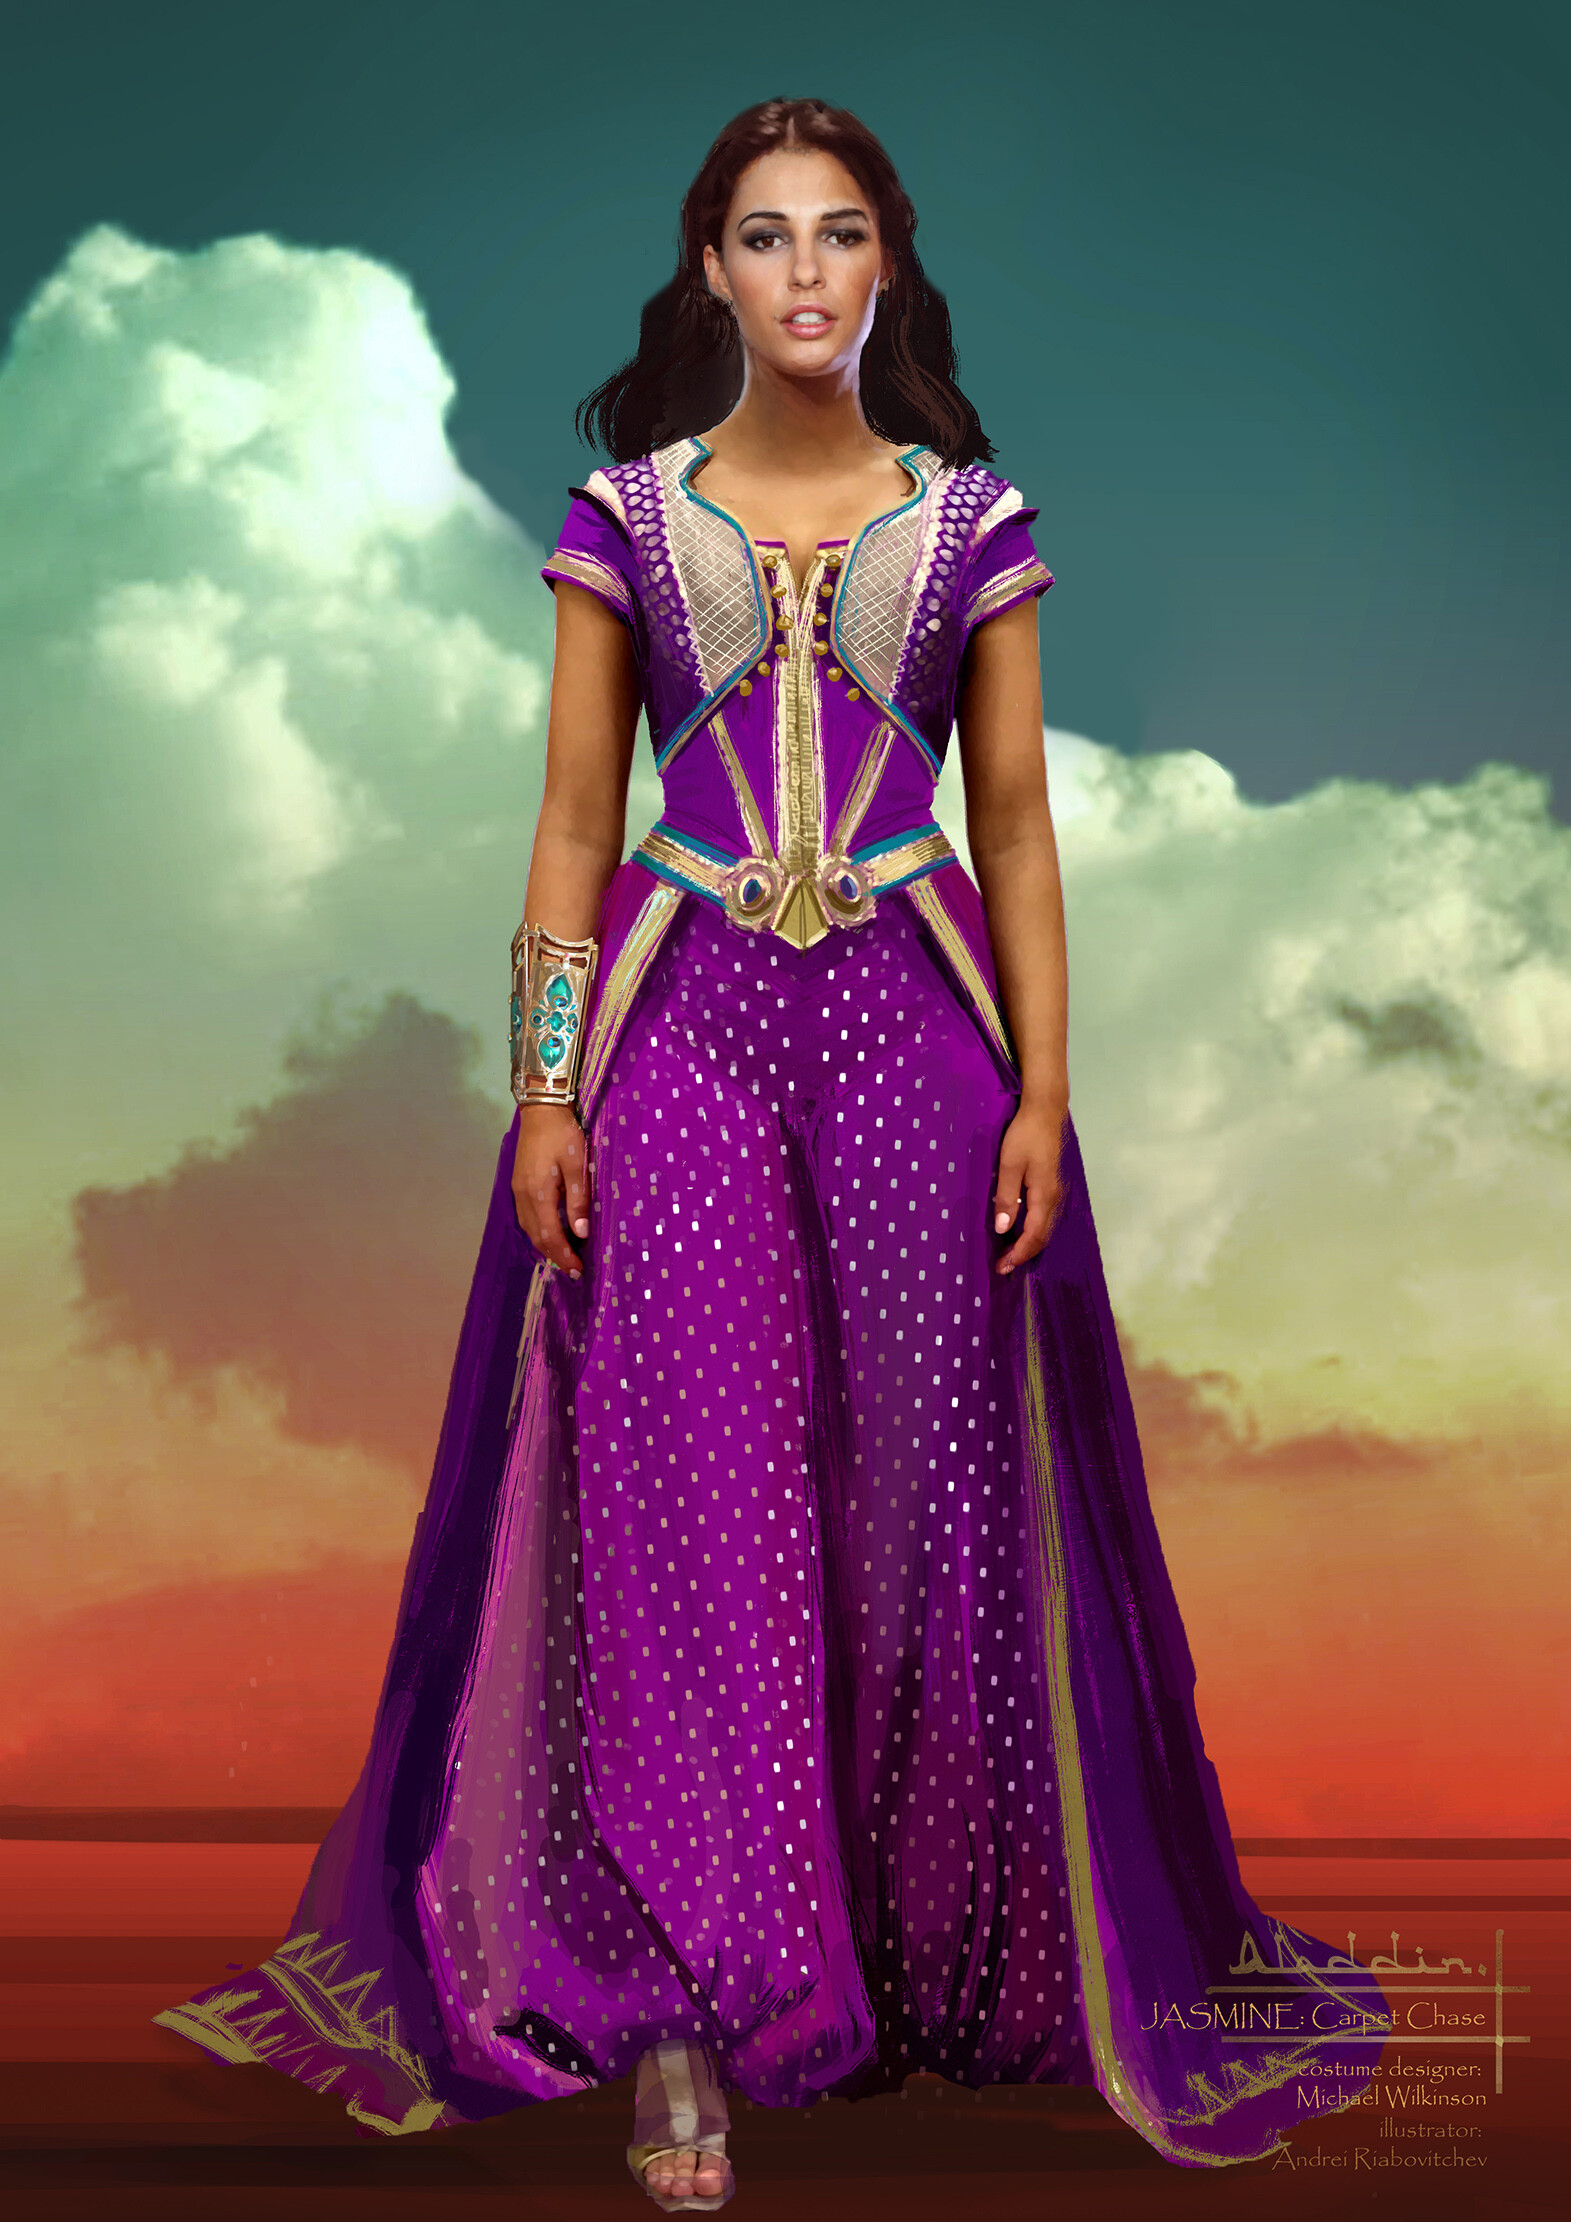 TeamAladdin - Aladdin [Disney - 2019] - Page 43 Andrei-riabovitchev-jasmine-carpet-chase-v001-001-ar